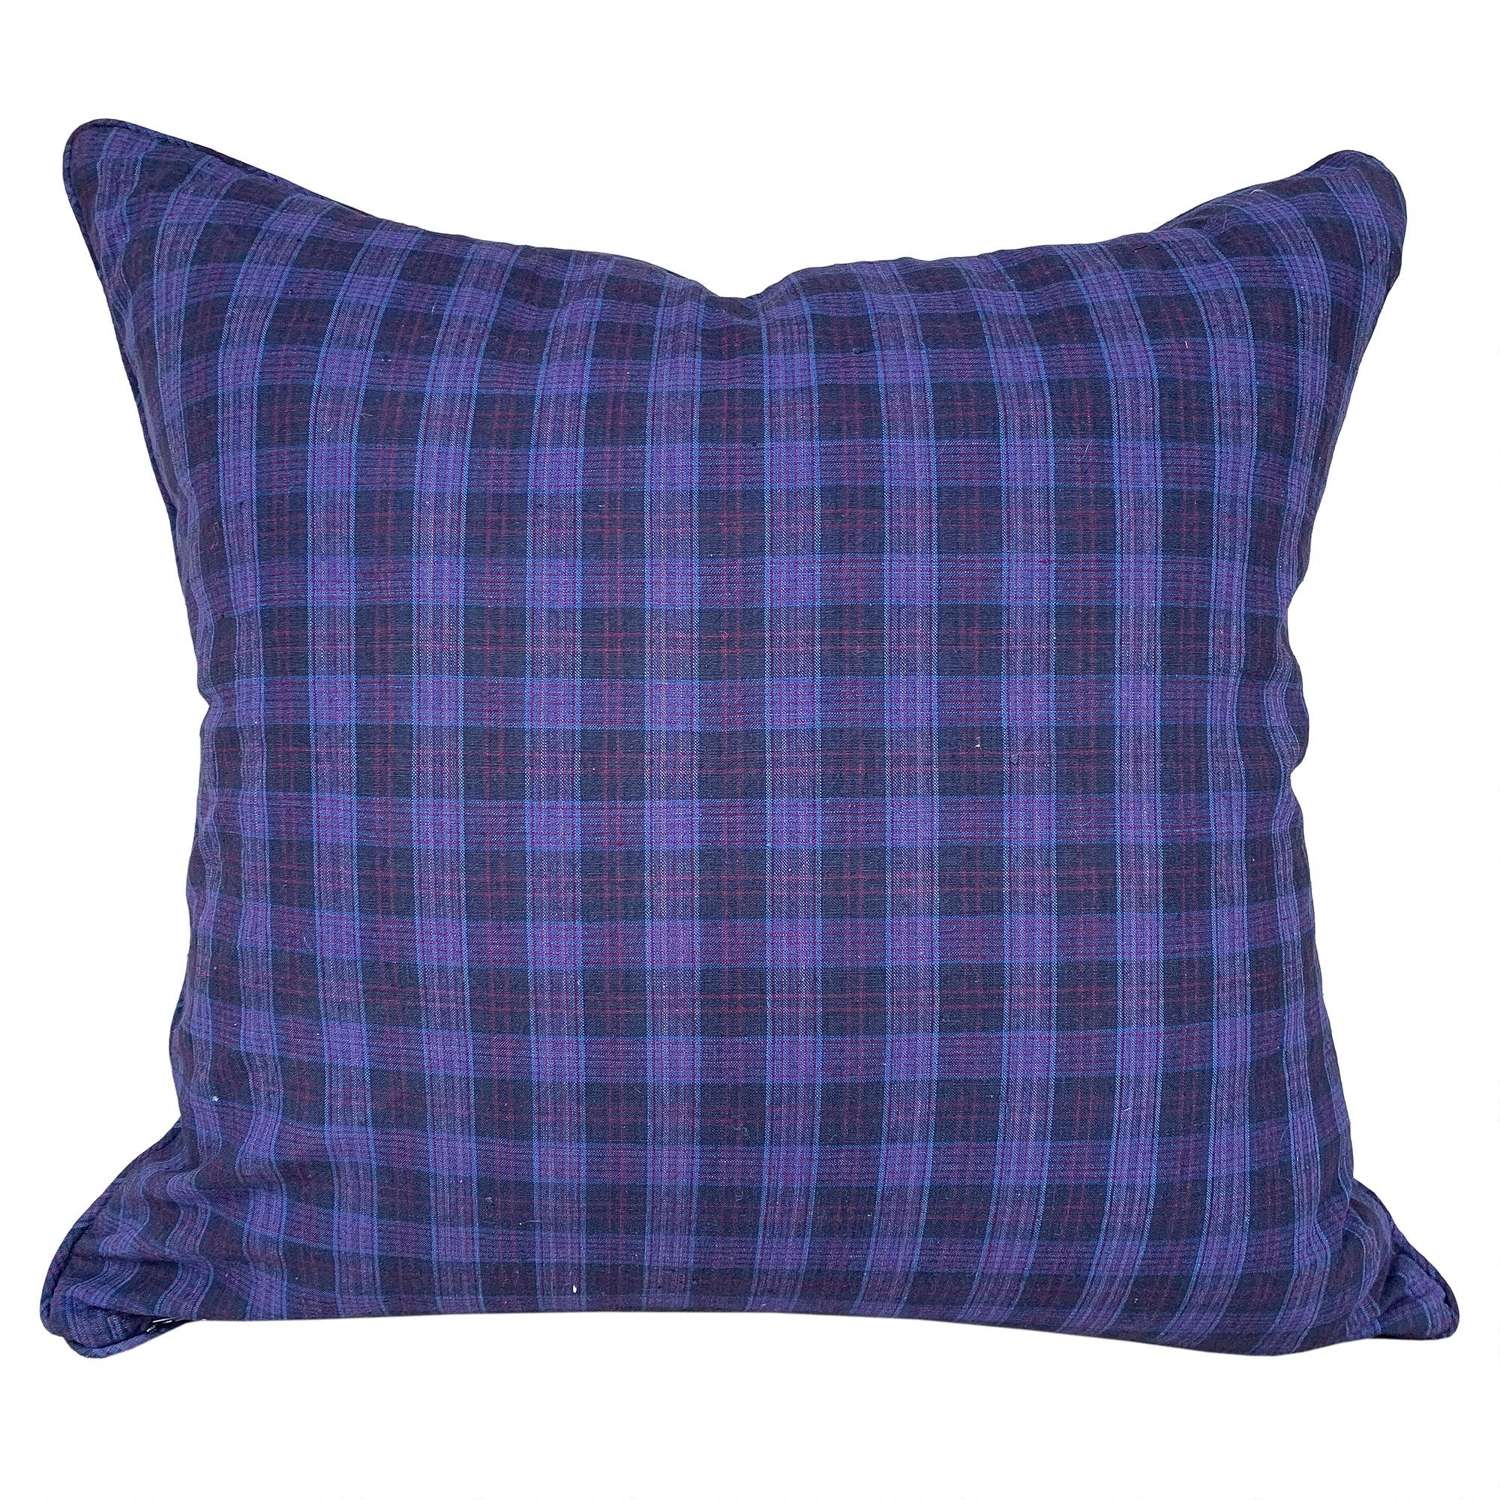 Songjiang Cushions, Blue Checks